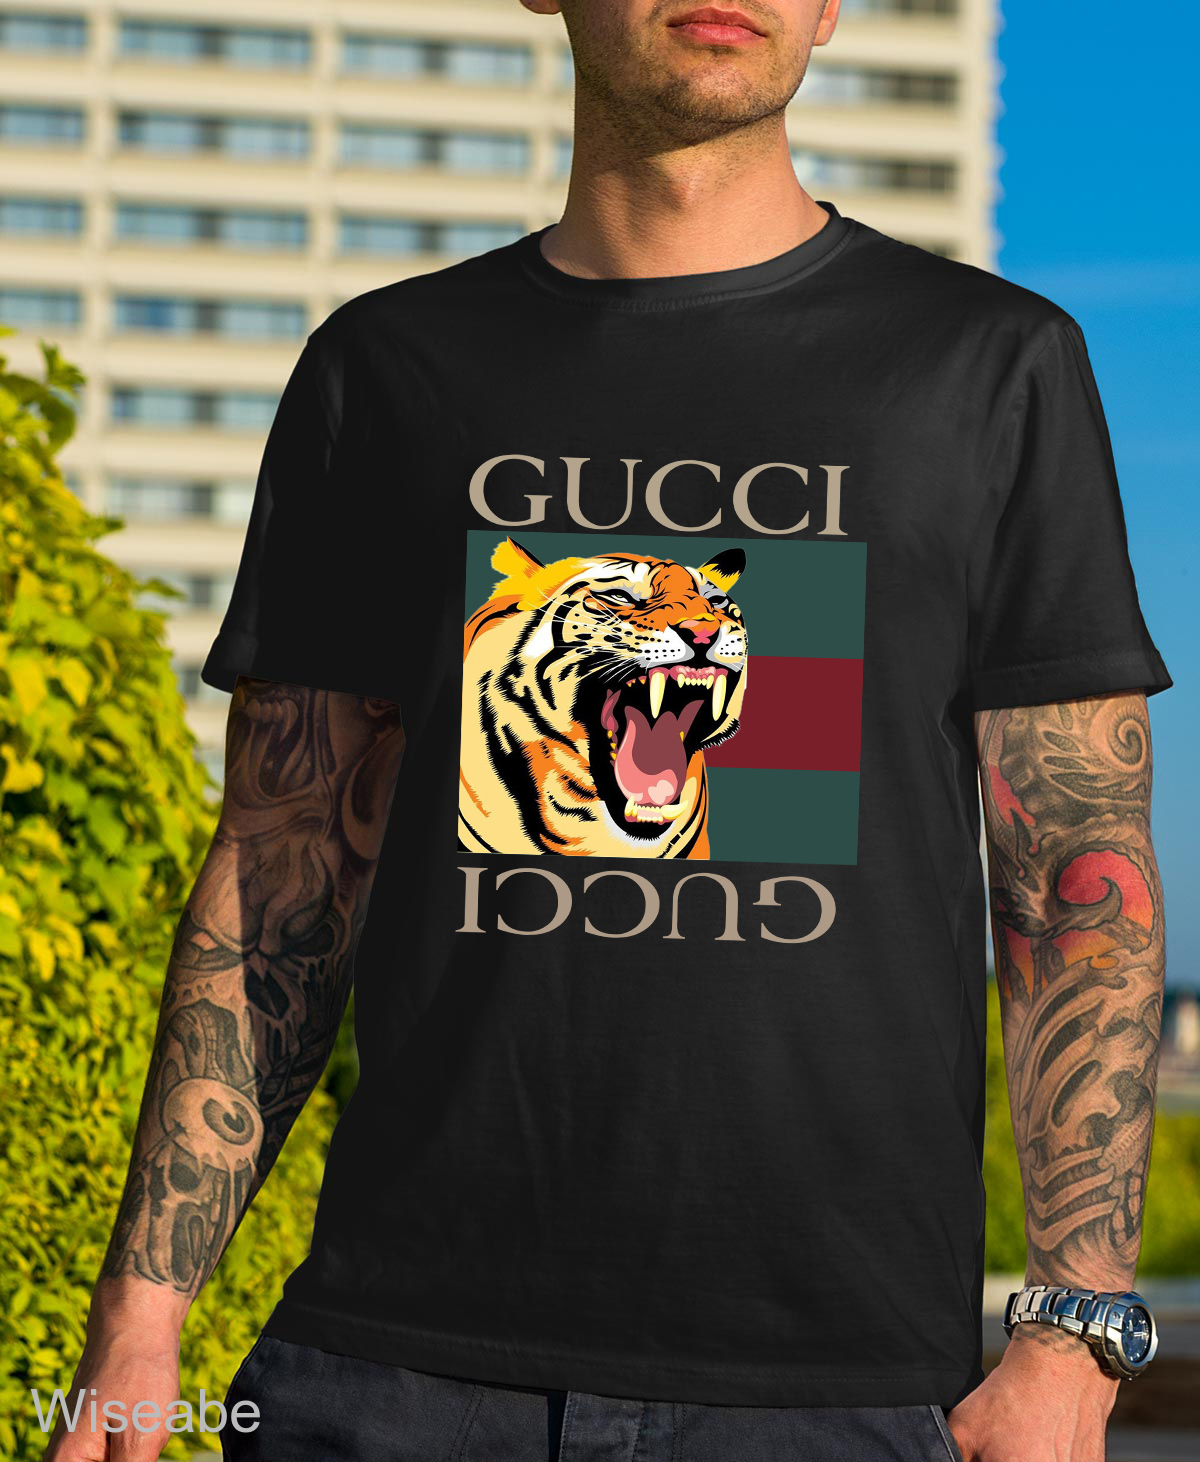 Gucci Tiger Shirt, Gucci Logo Shirt - Wiseabe Apparels